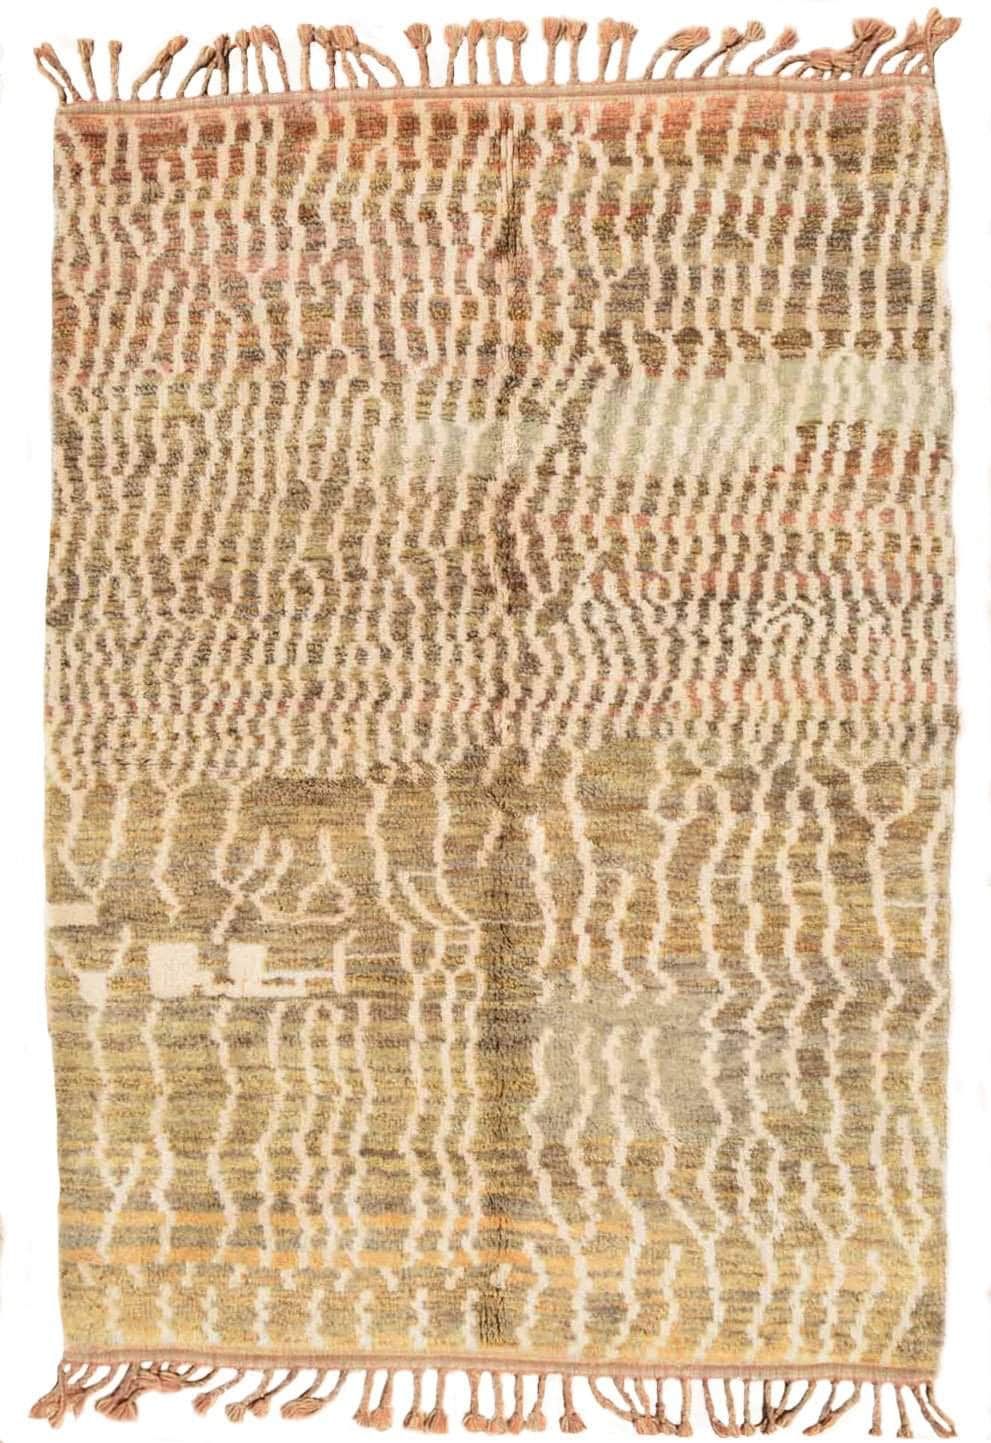 Brown Moroccan rug